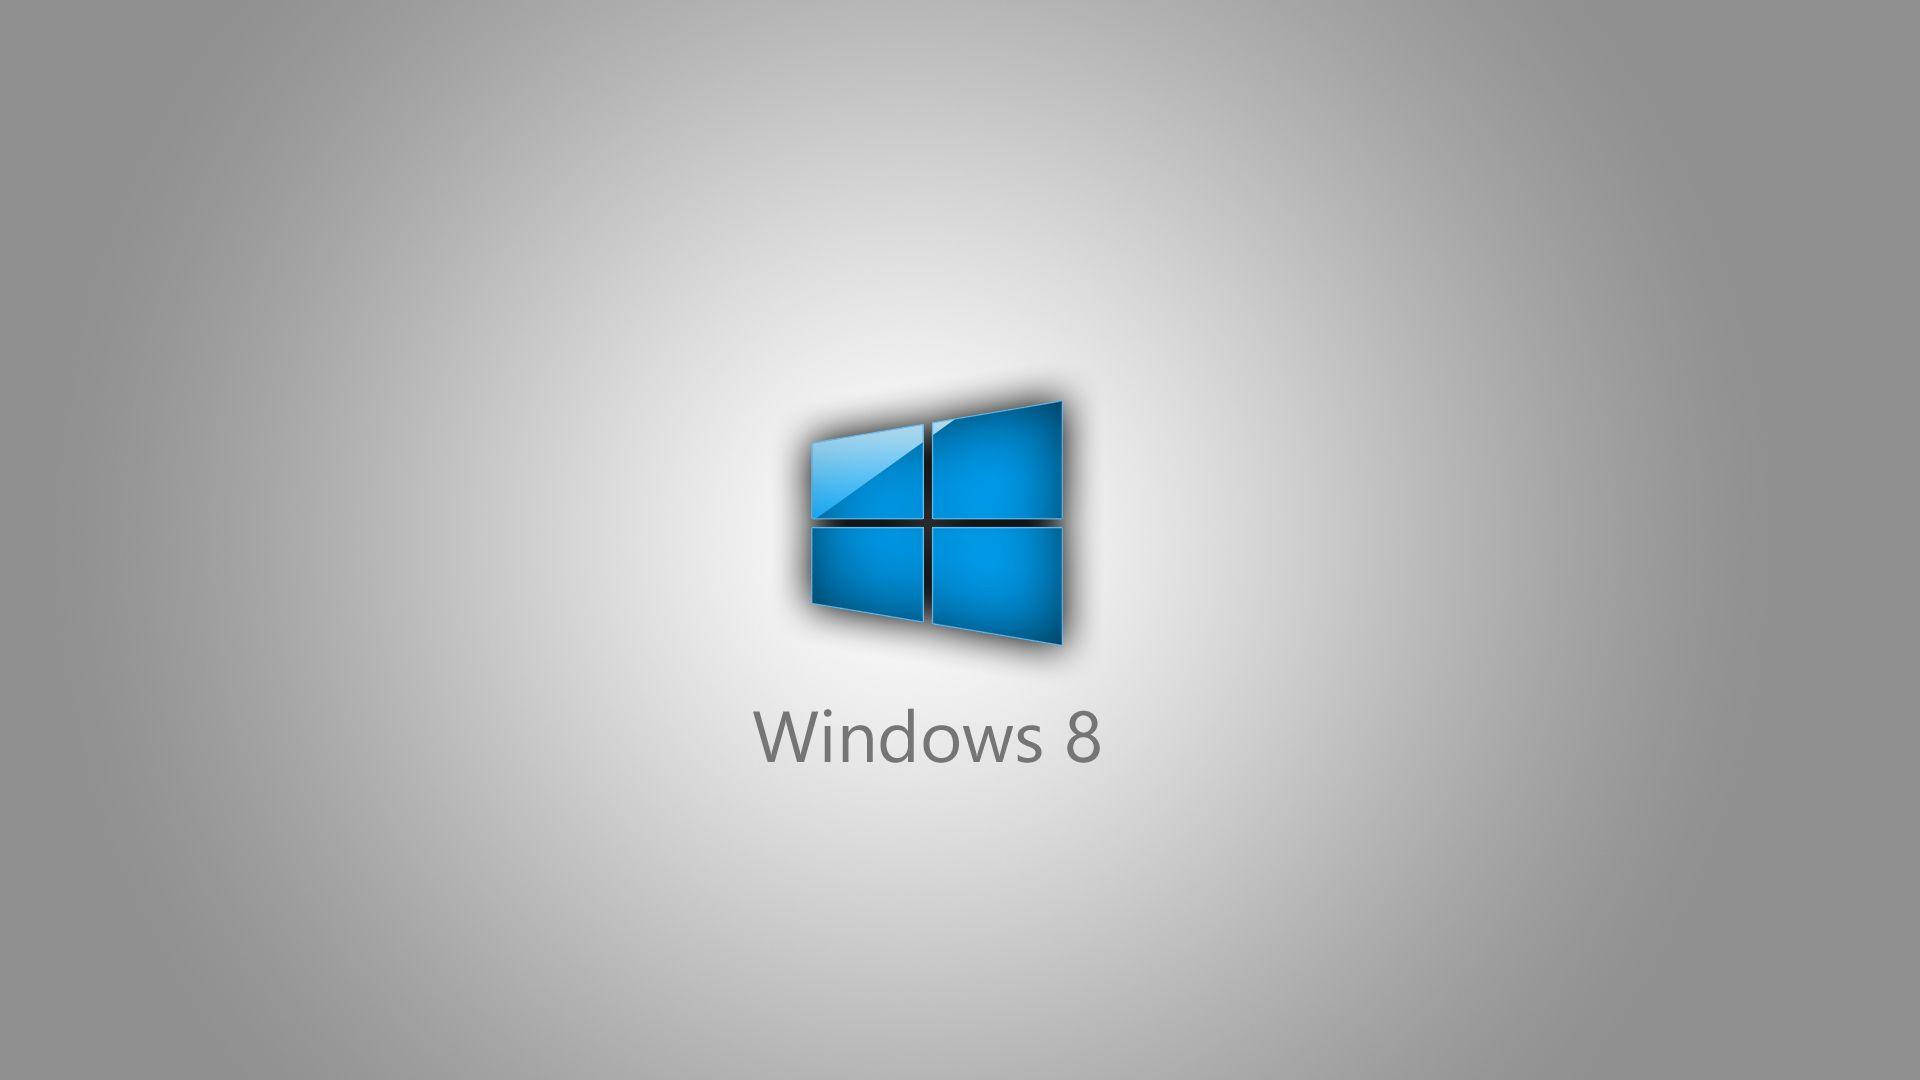 Windows 8 logo on a white gradient background. Wallpaper